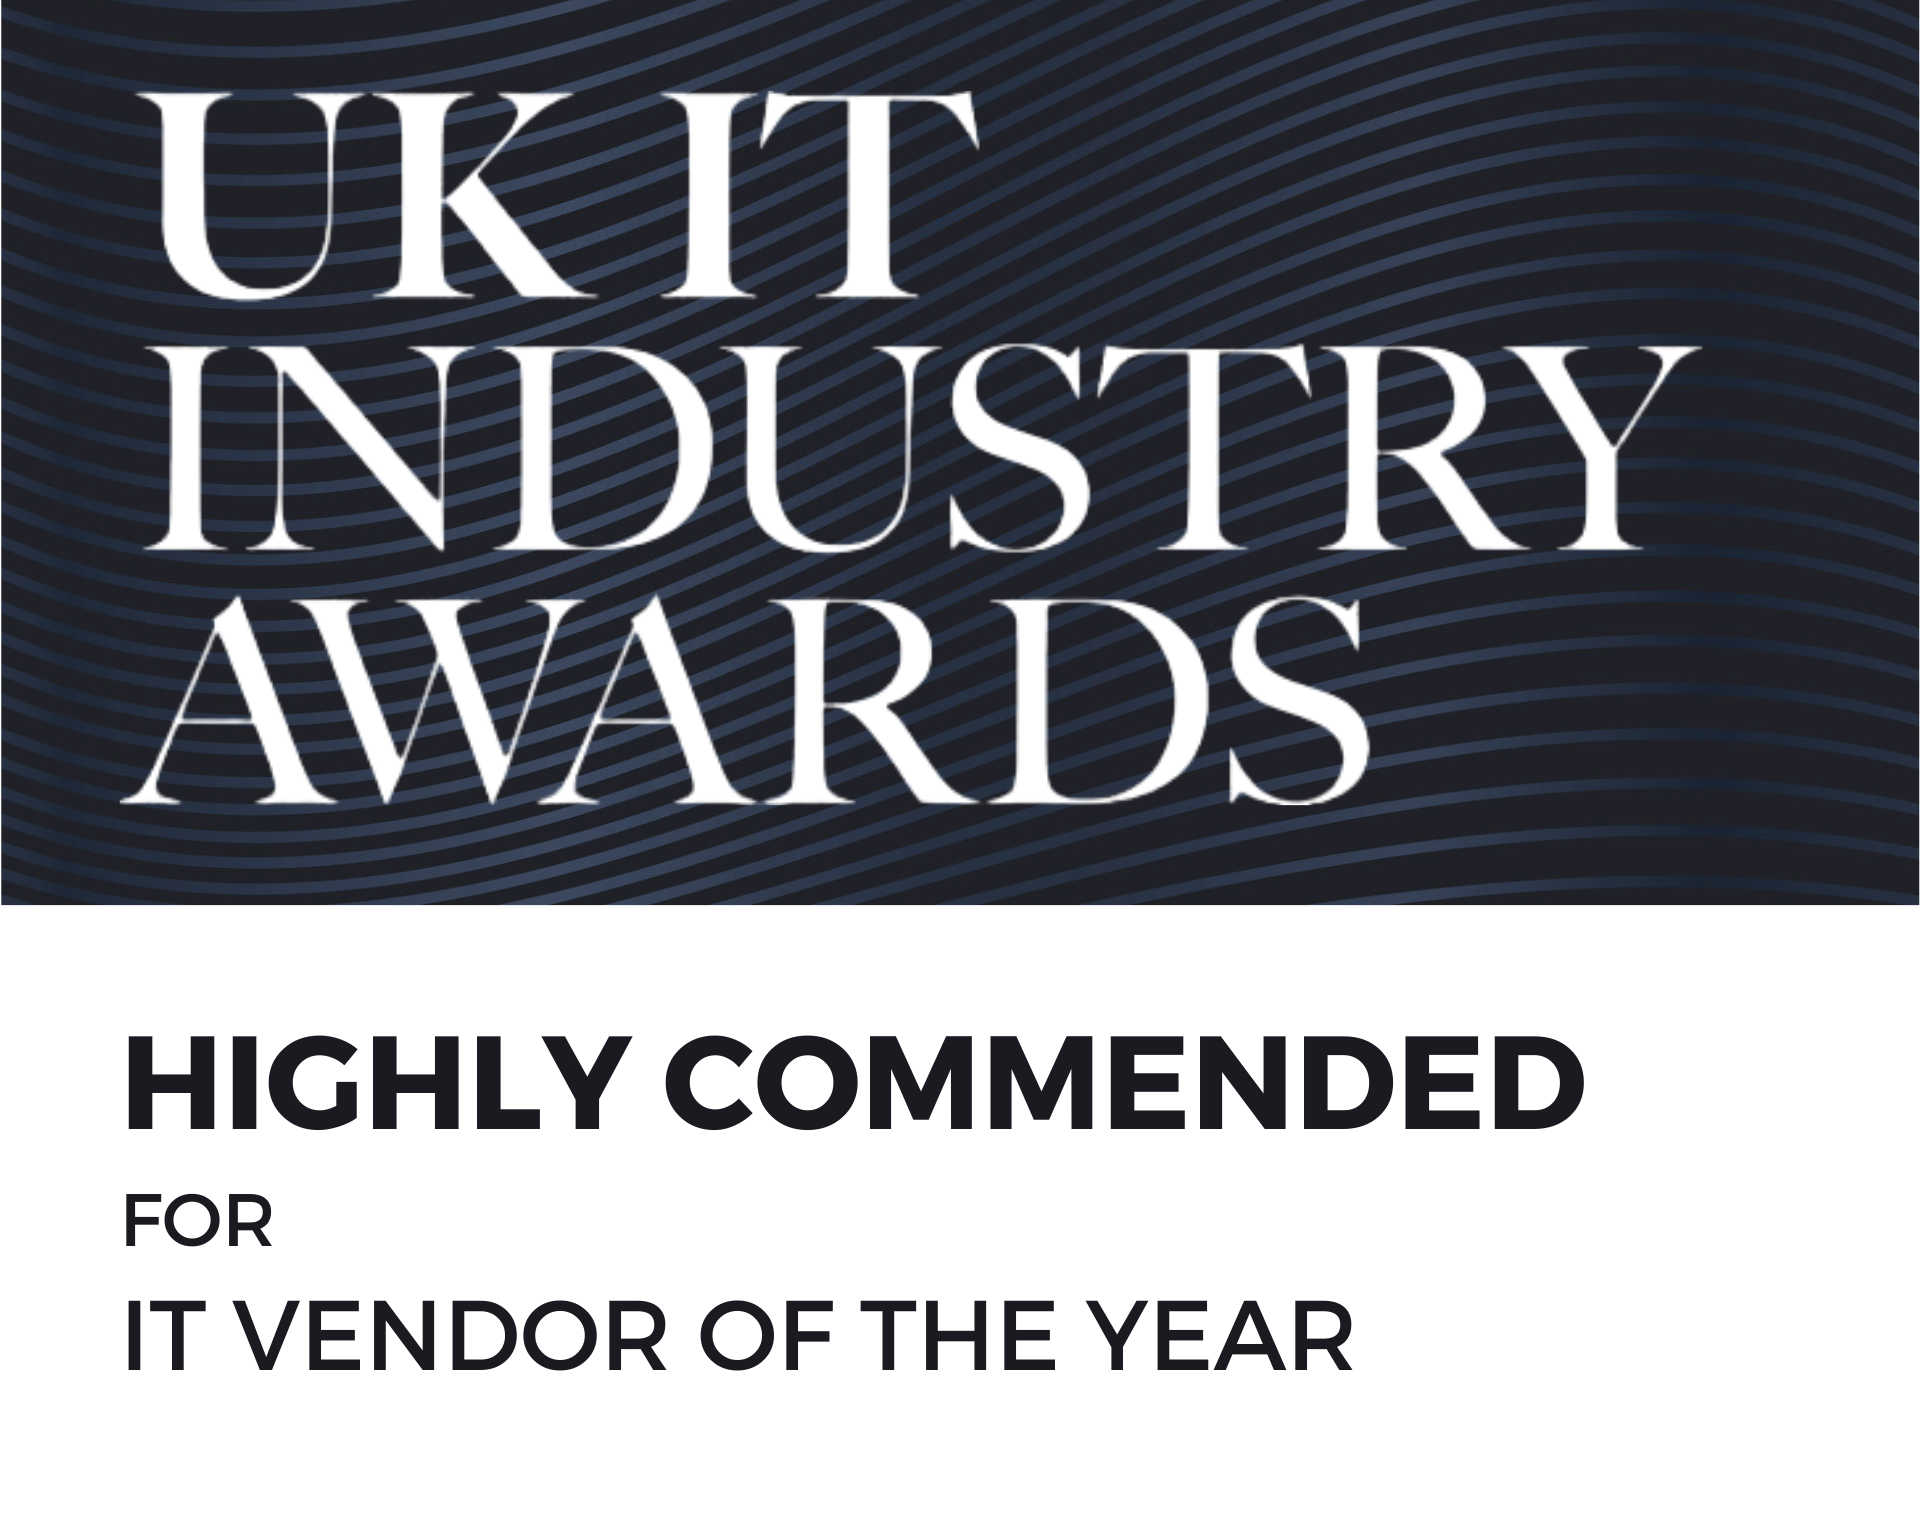 UK IT Industry Awards